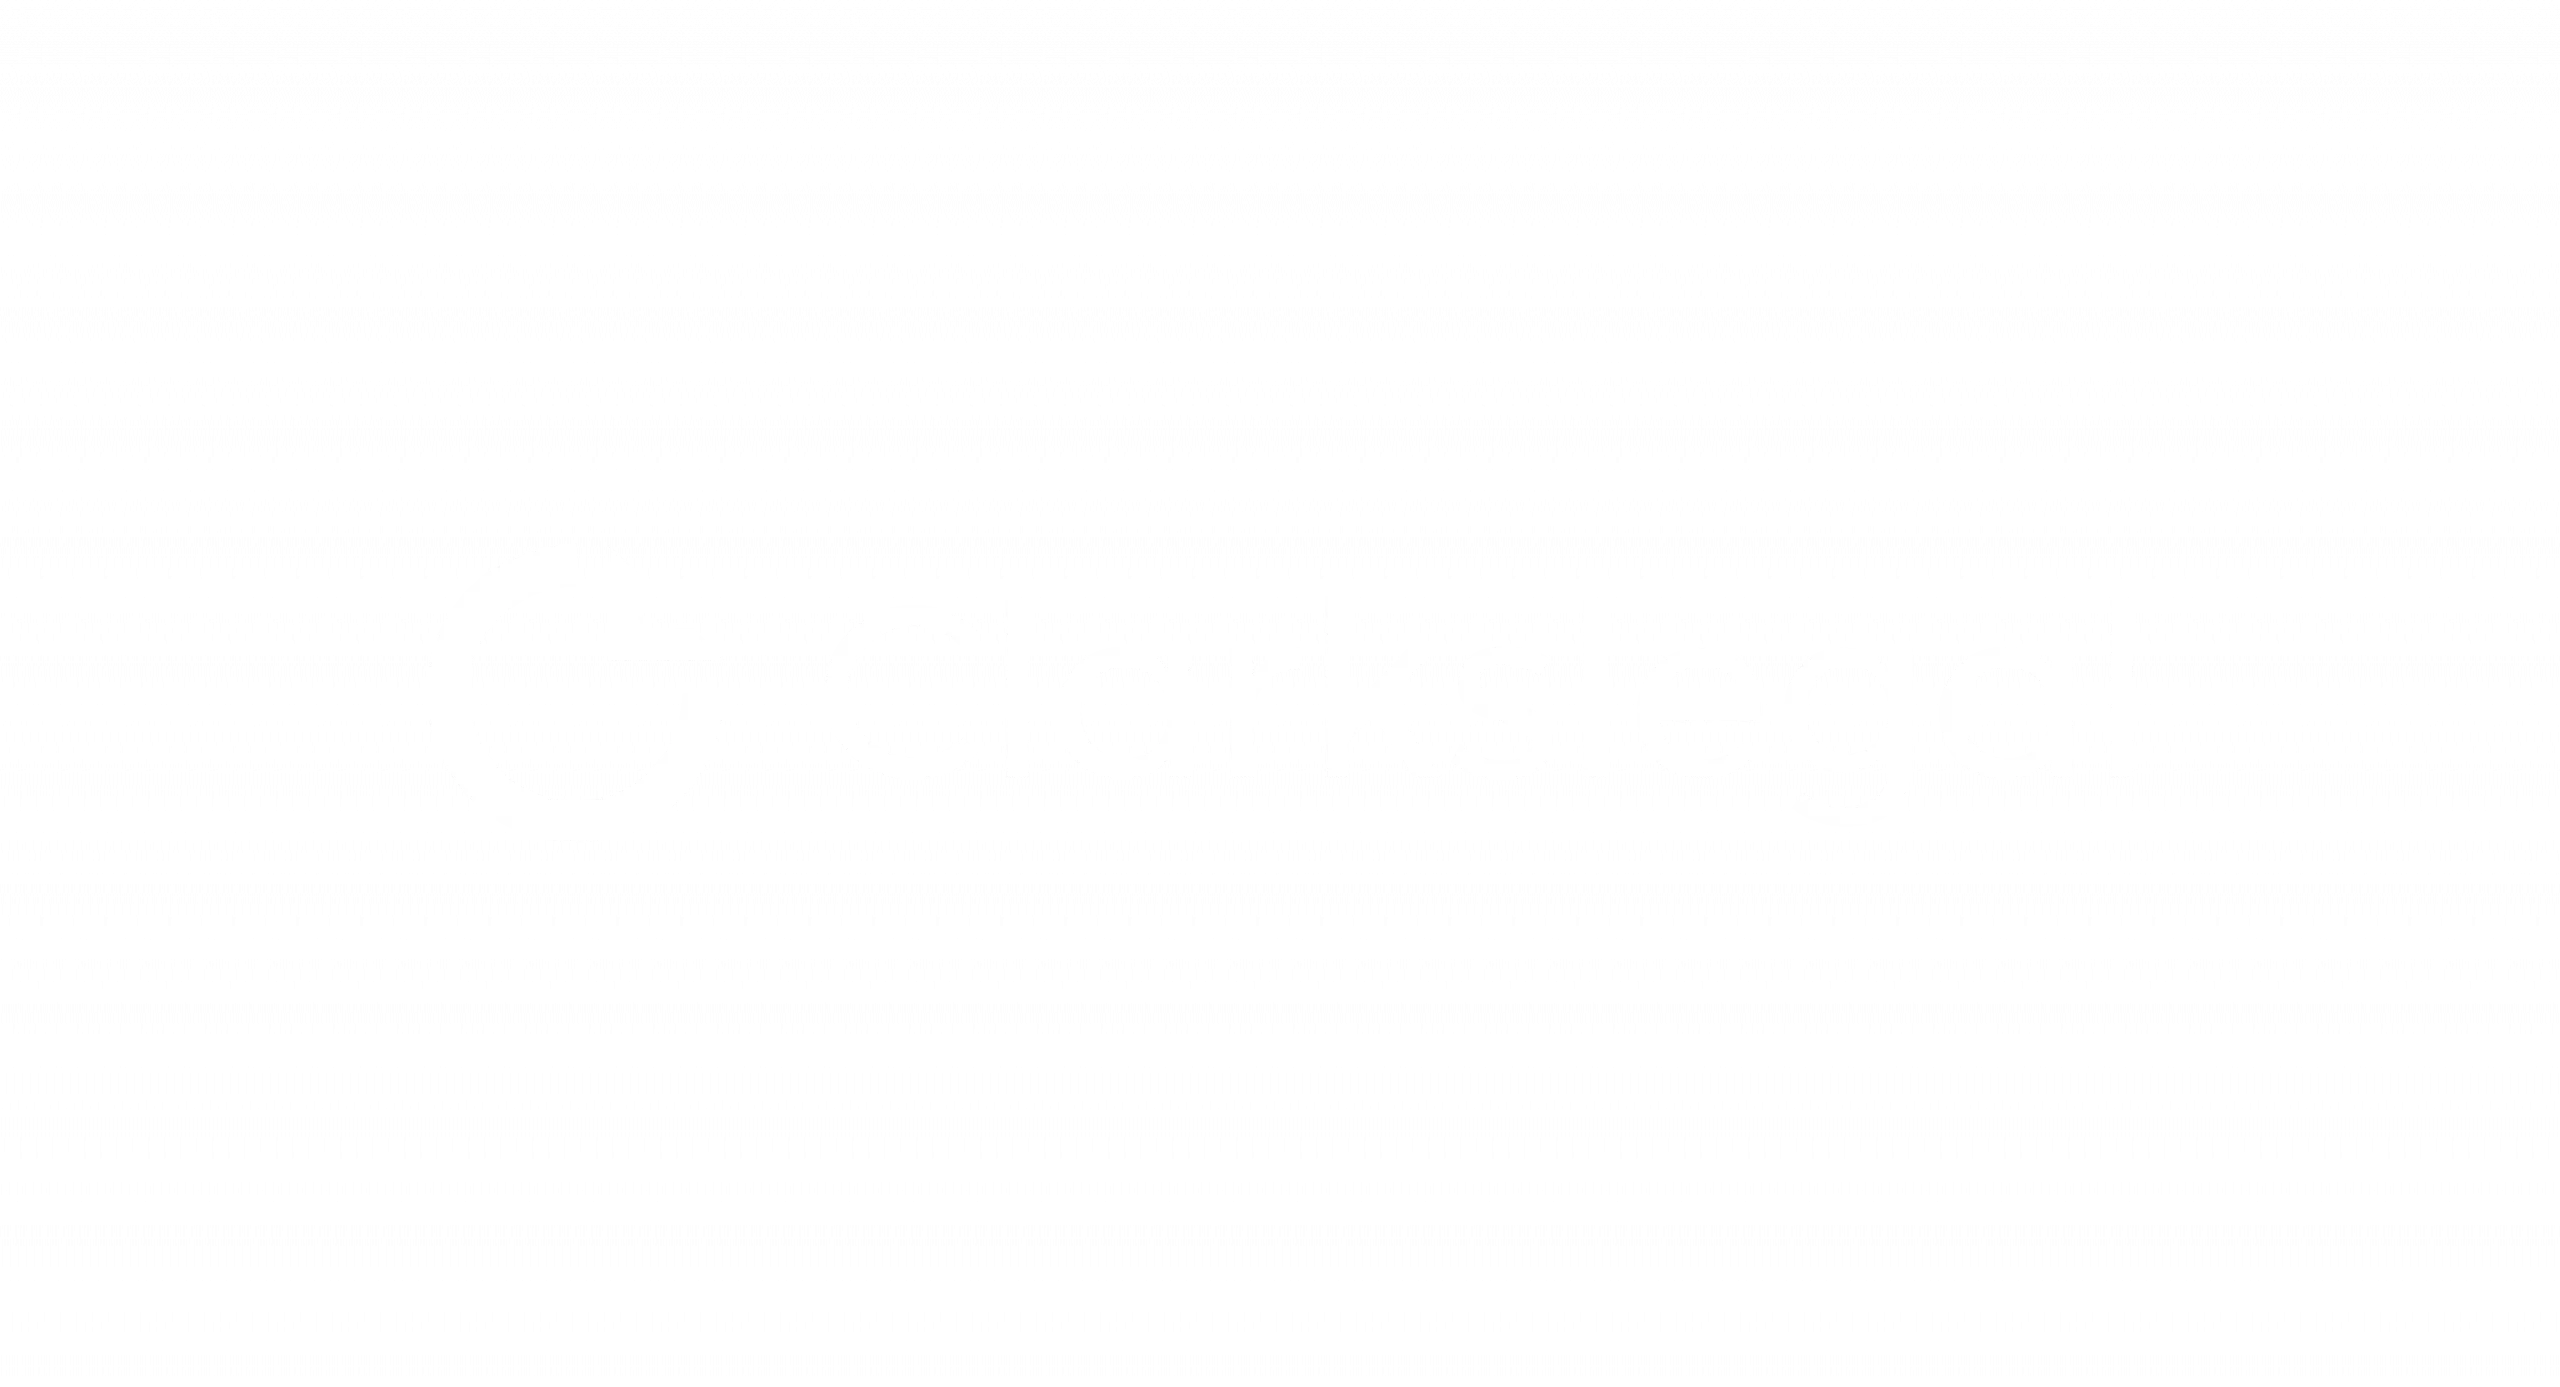 Clarkslegal Brand Identity by Peek Creative Limited